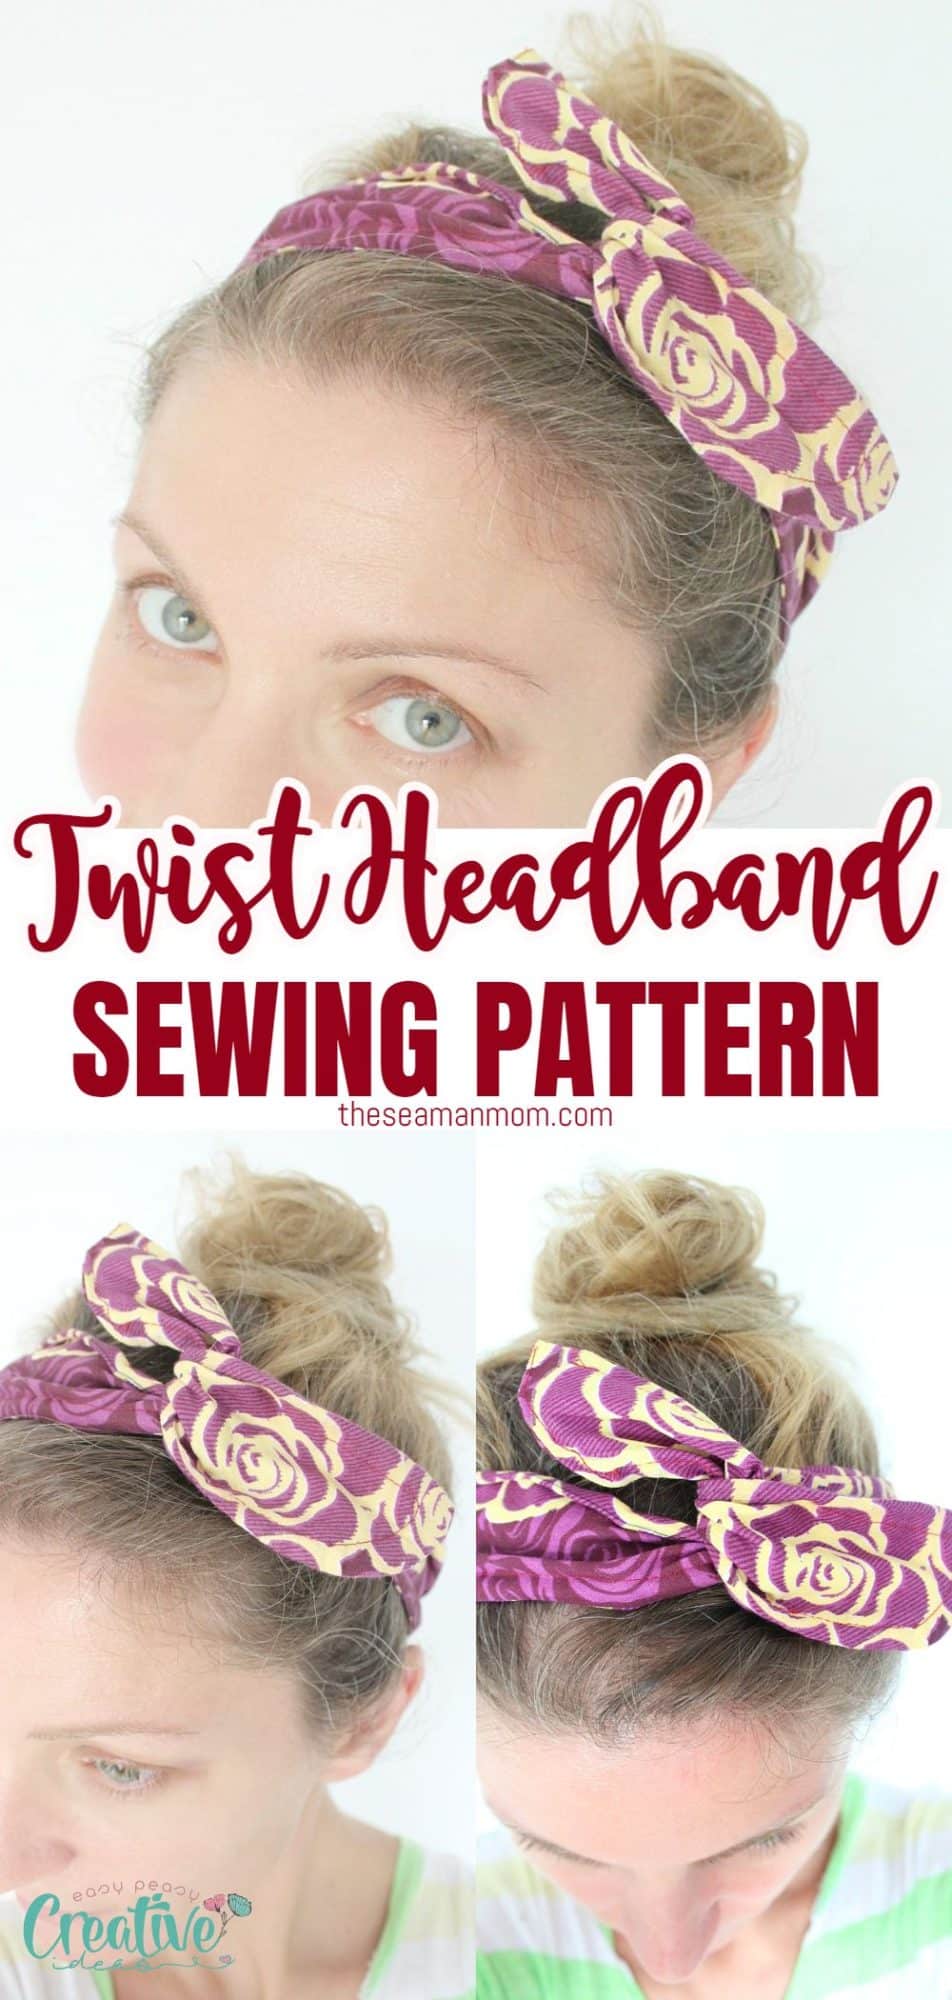 Twist wire headband sewing pattern